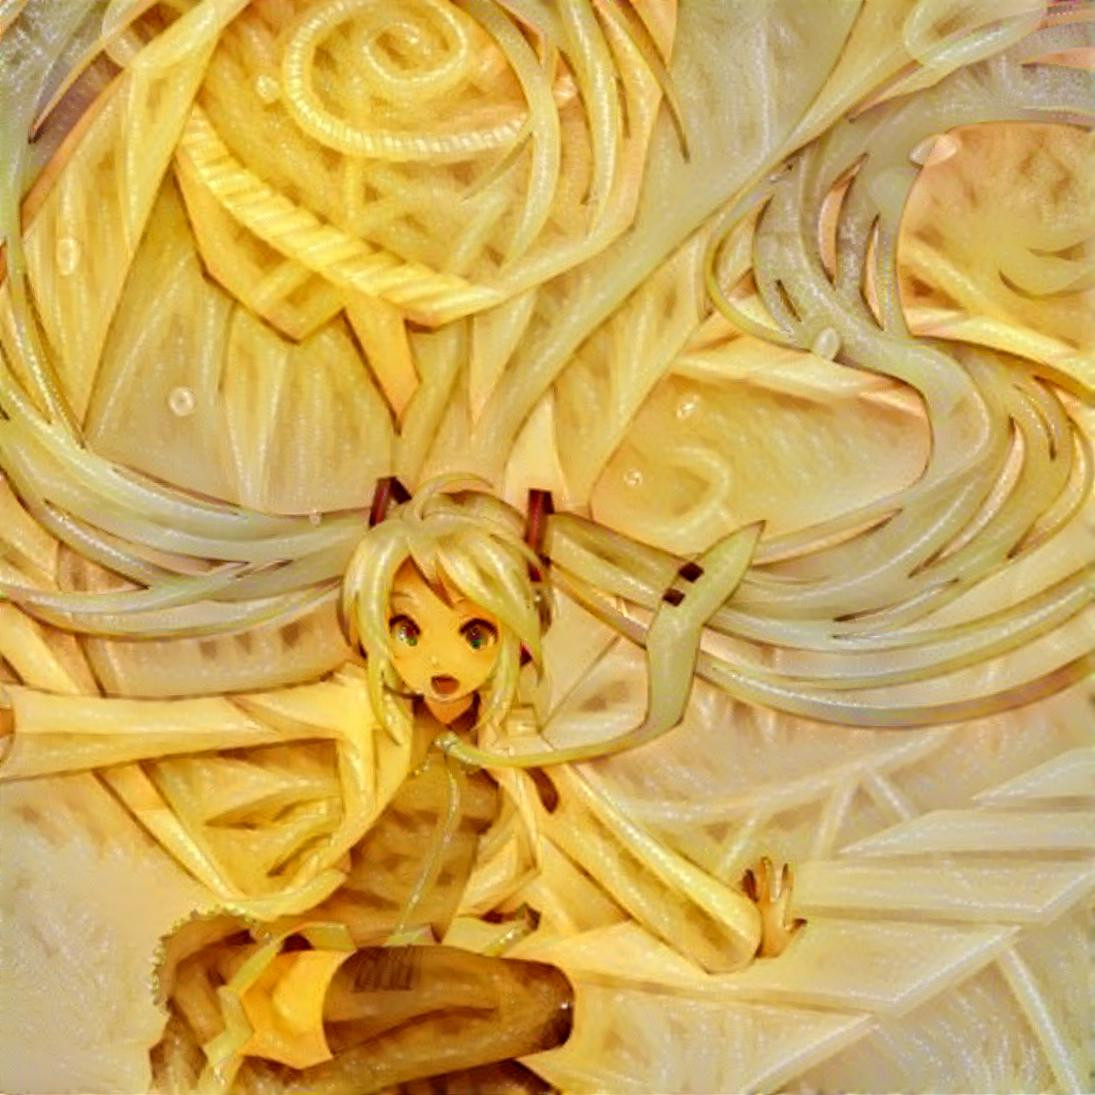 cat eating spaghetti - Spaghetti-Loving Cat: Cute Anime Cartoon on White